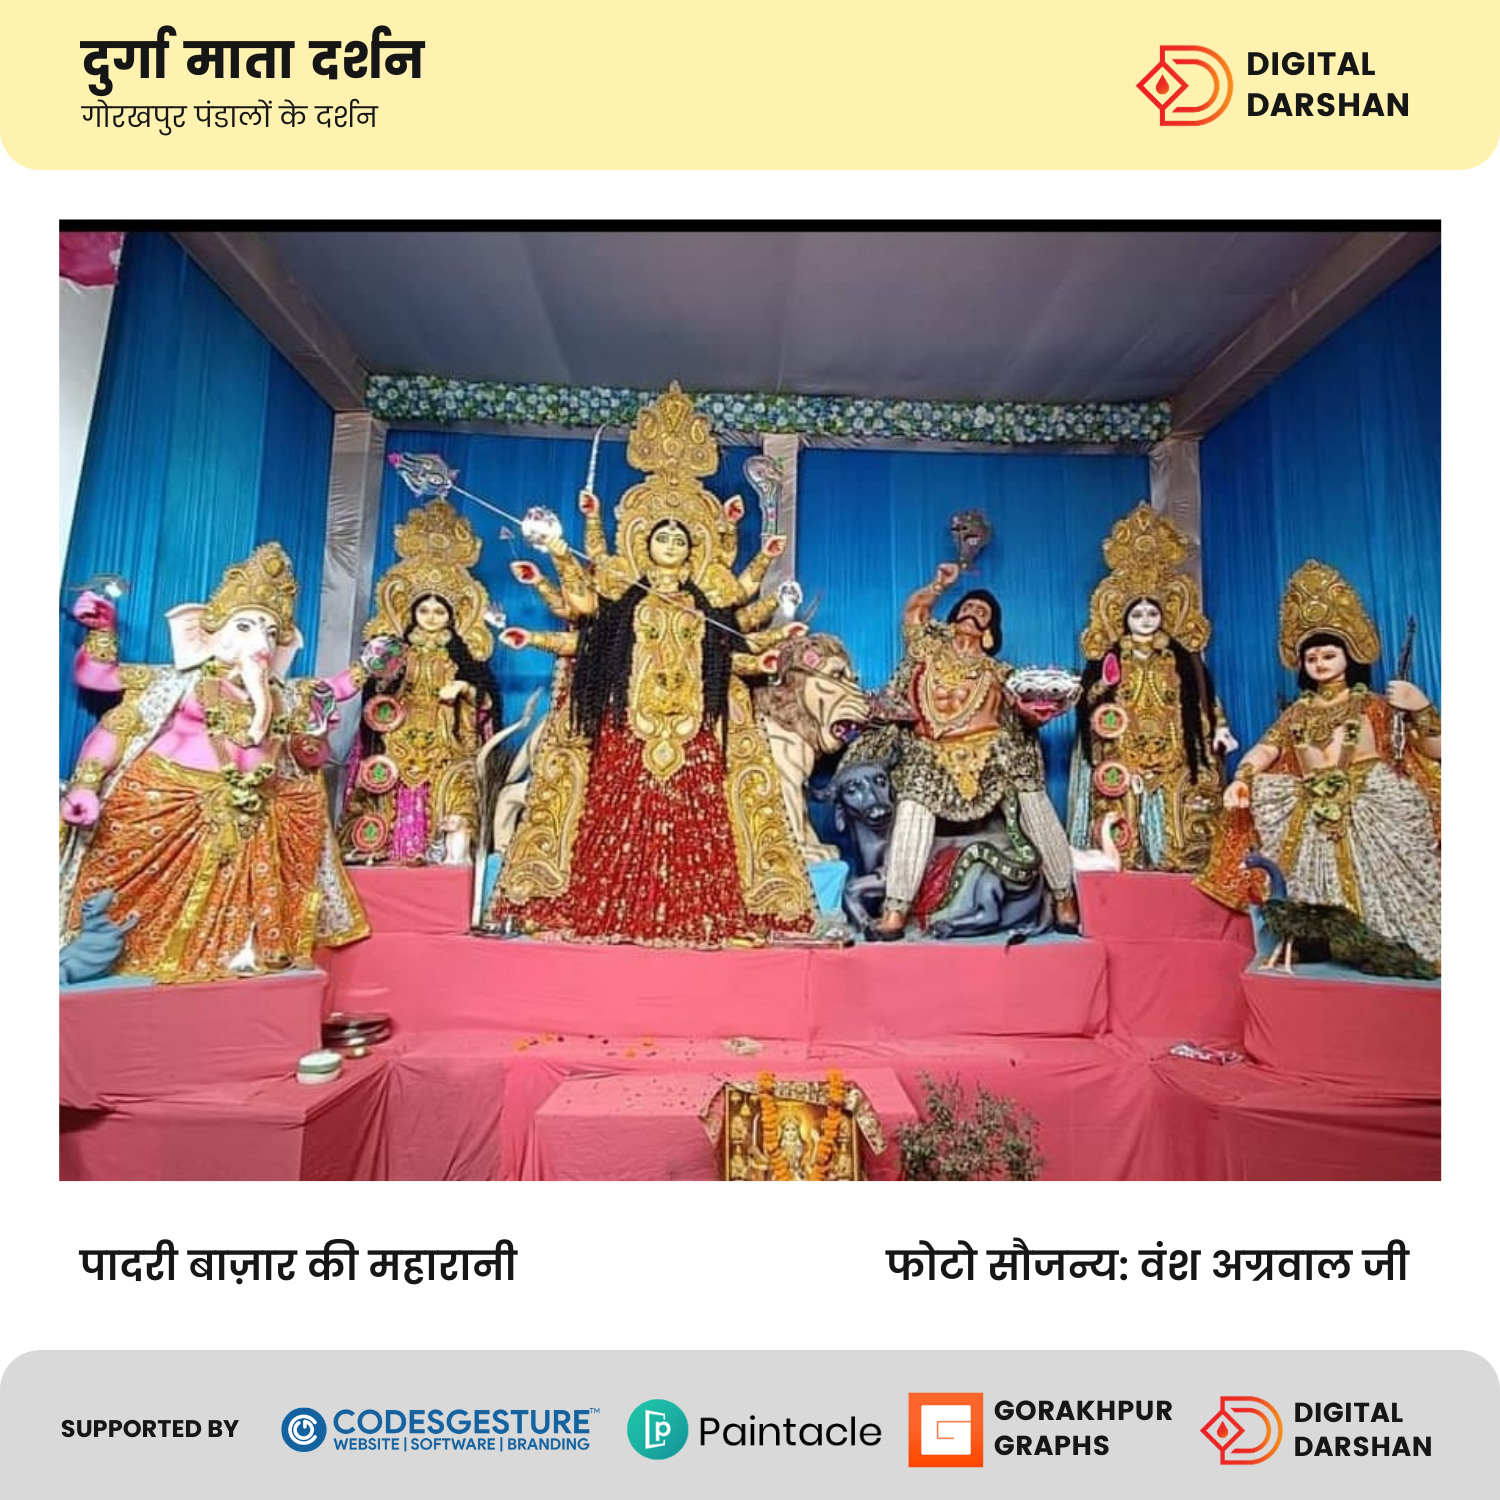 Digital Darshan Campaign by CodesGesture Gorakhpur, Durga Pooja Gorakhpur, Durga Mata Images Gorakhpur, Durga Mata, Durga Pooja in India, Durga Pooja Images, Durga Baadi Images in Gorakhpur, Durga Pooja Photos in Gorakhpur, Durga Pooja Videos in Gorakhpur